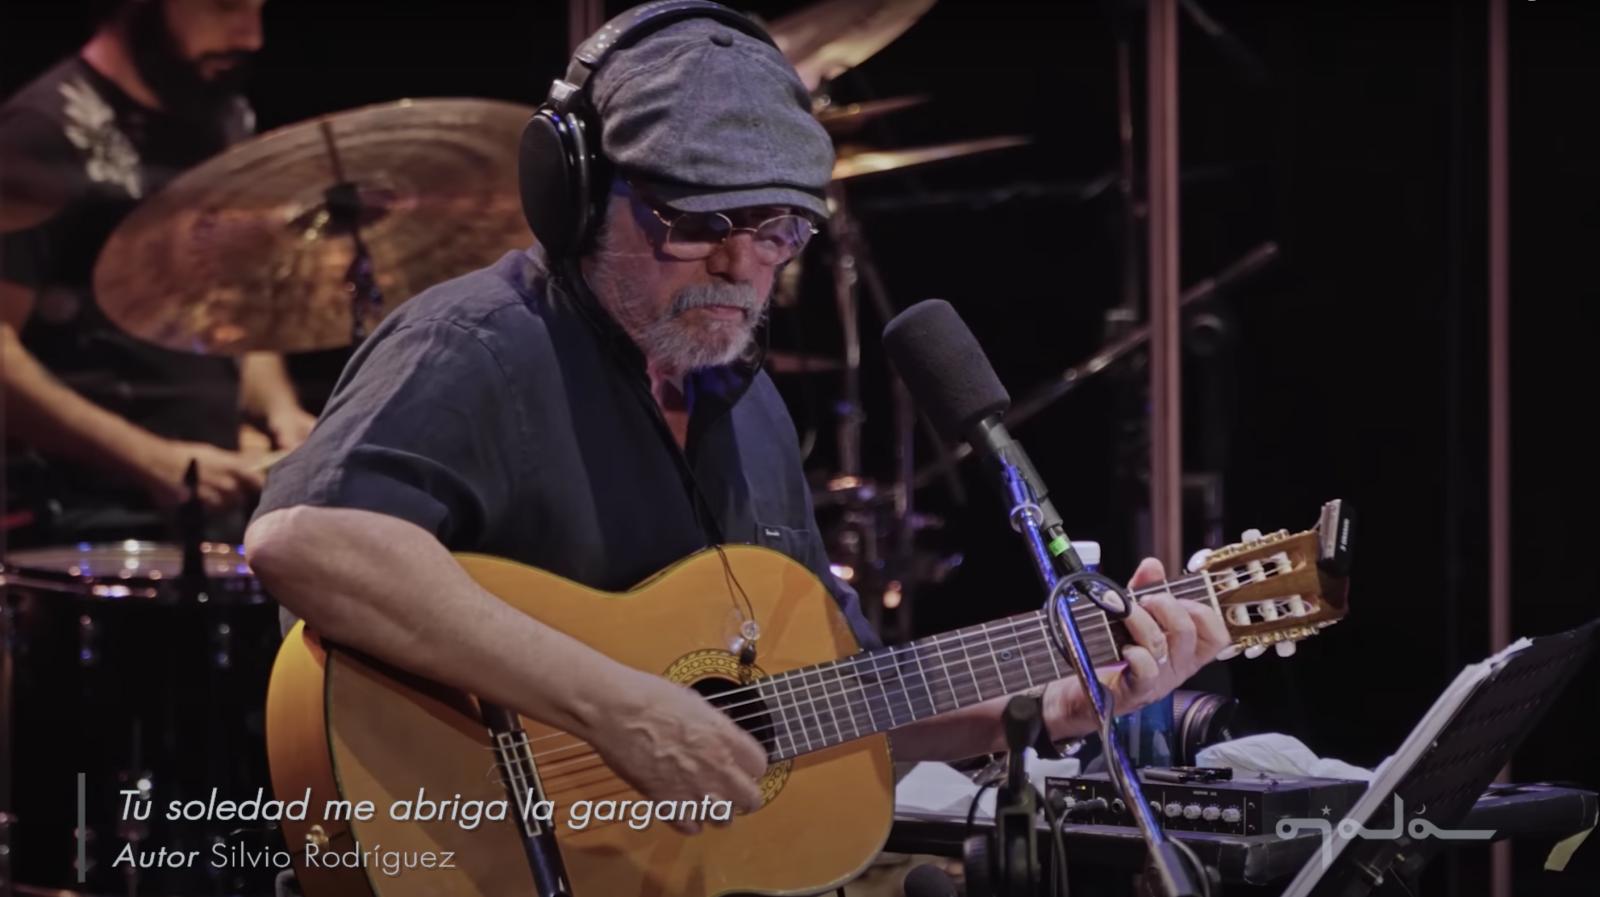 Thumbnail of Tu soledad me abriga la garganta. Song from Silvio Rodriguez concert.